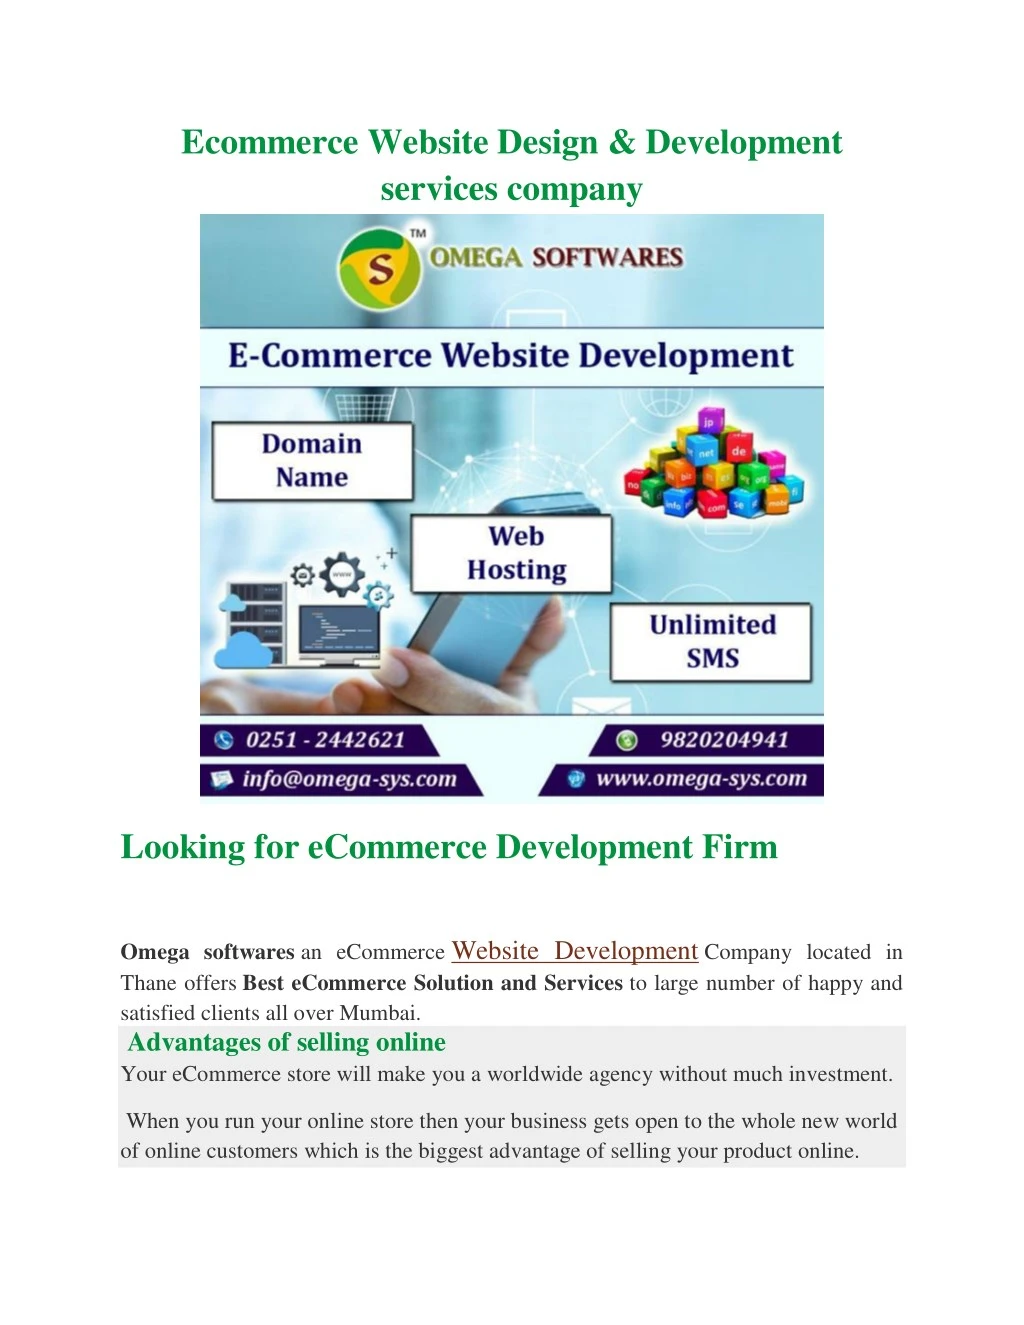 ecommerce website design development services